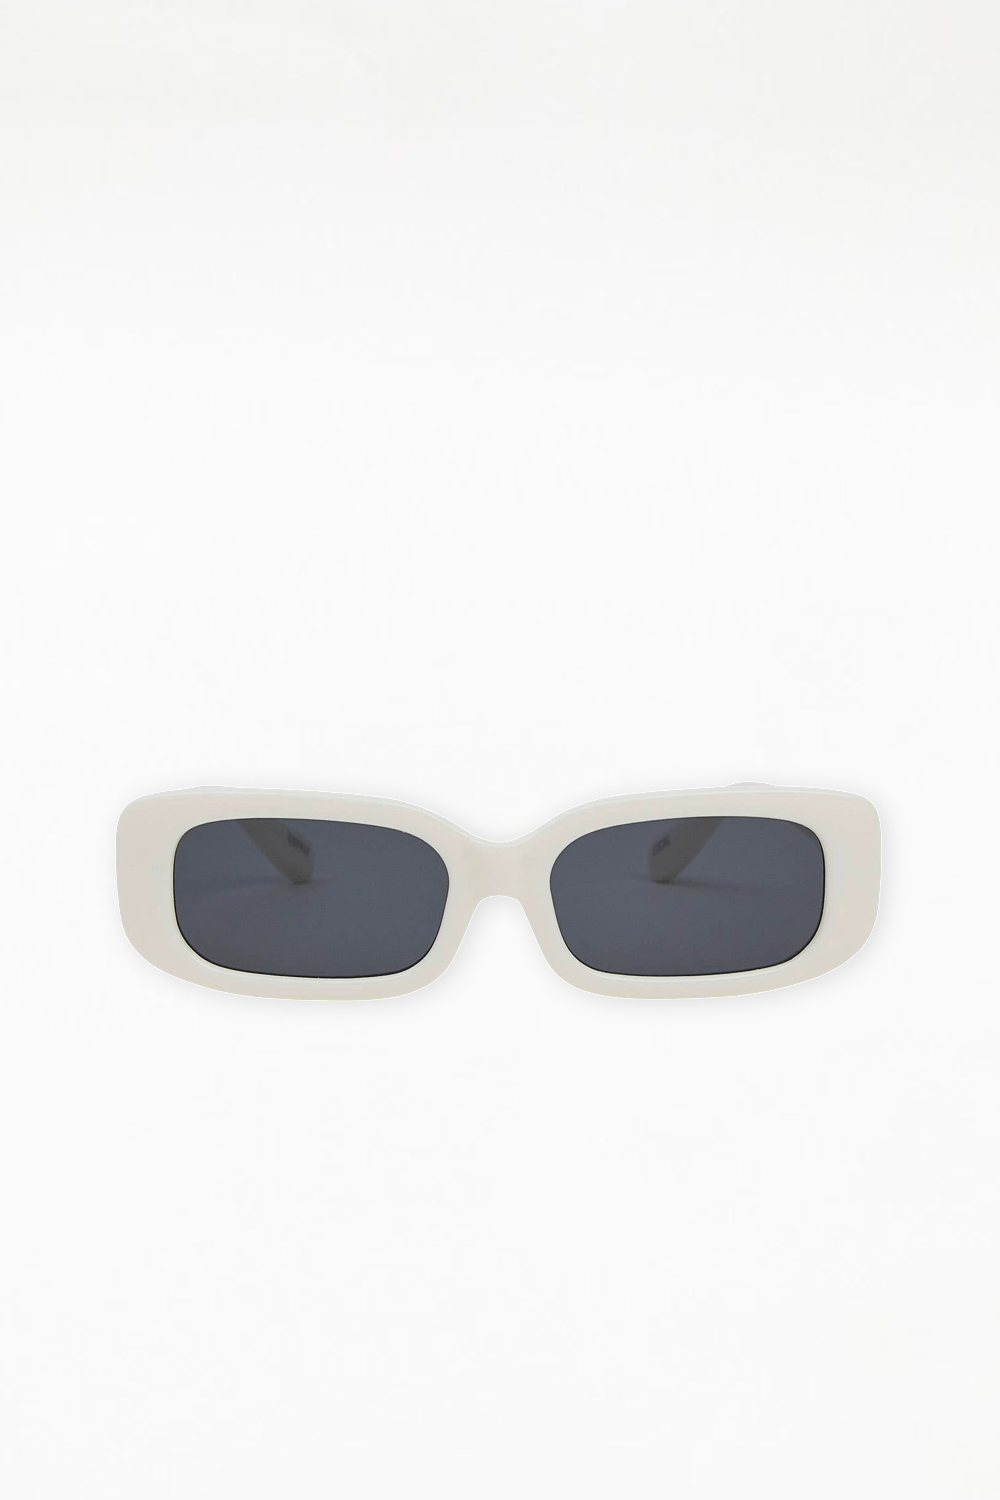 Local Supply Sunglasses - CPT - White - Ensemble Studios